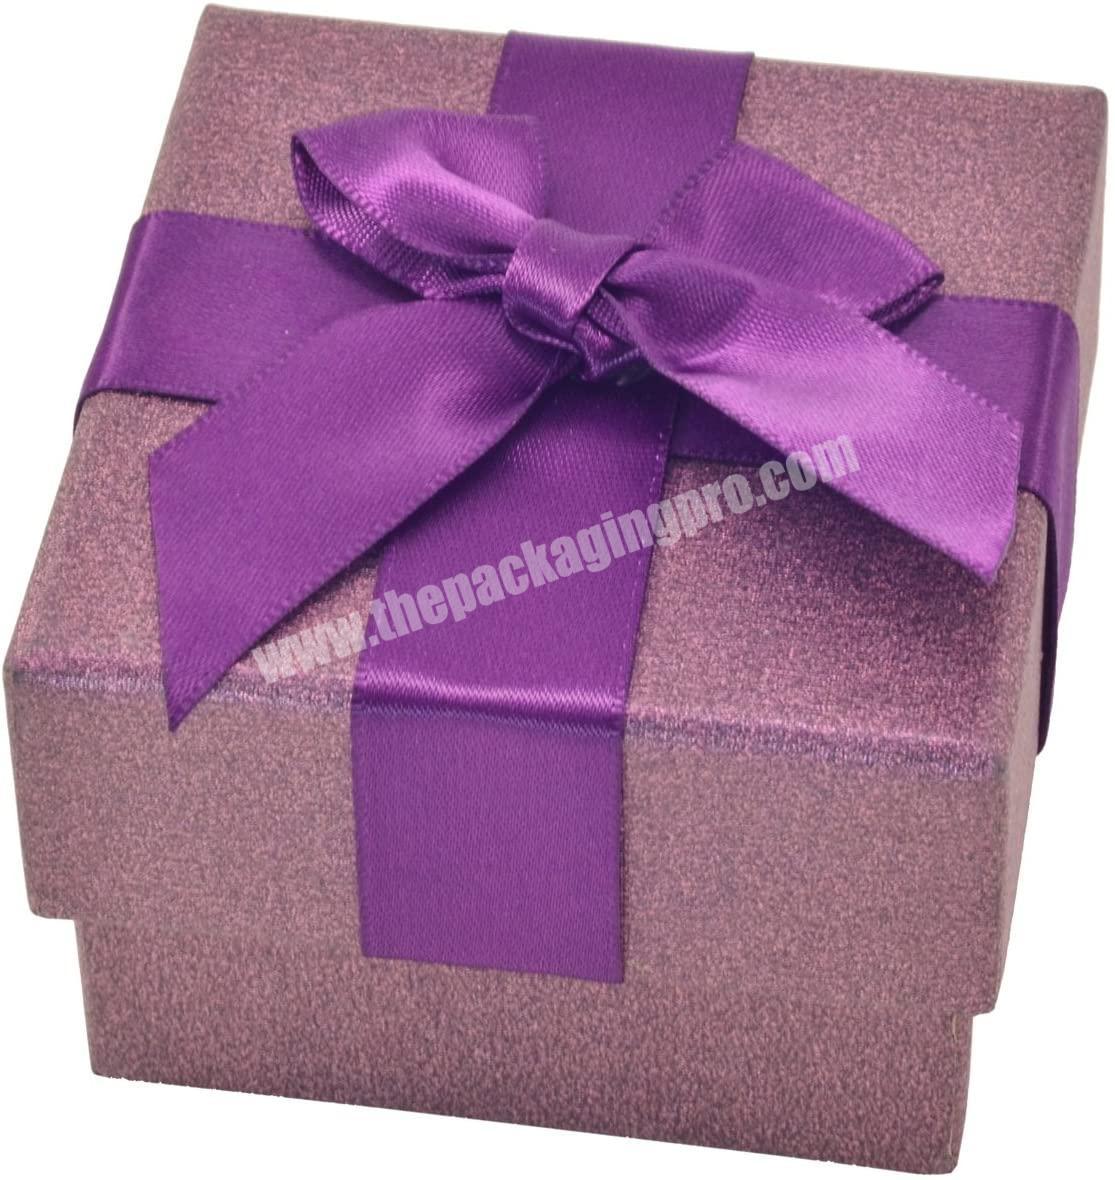 Popular high quality thin purple gift box